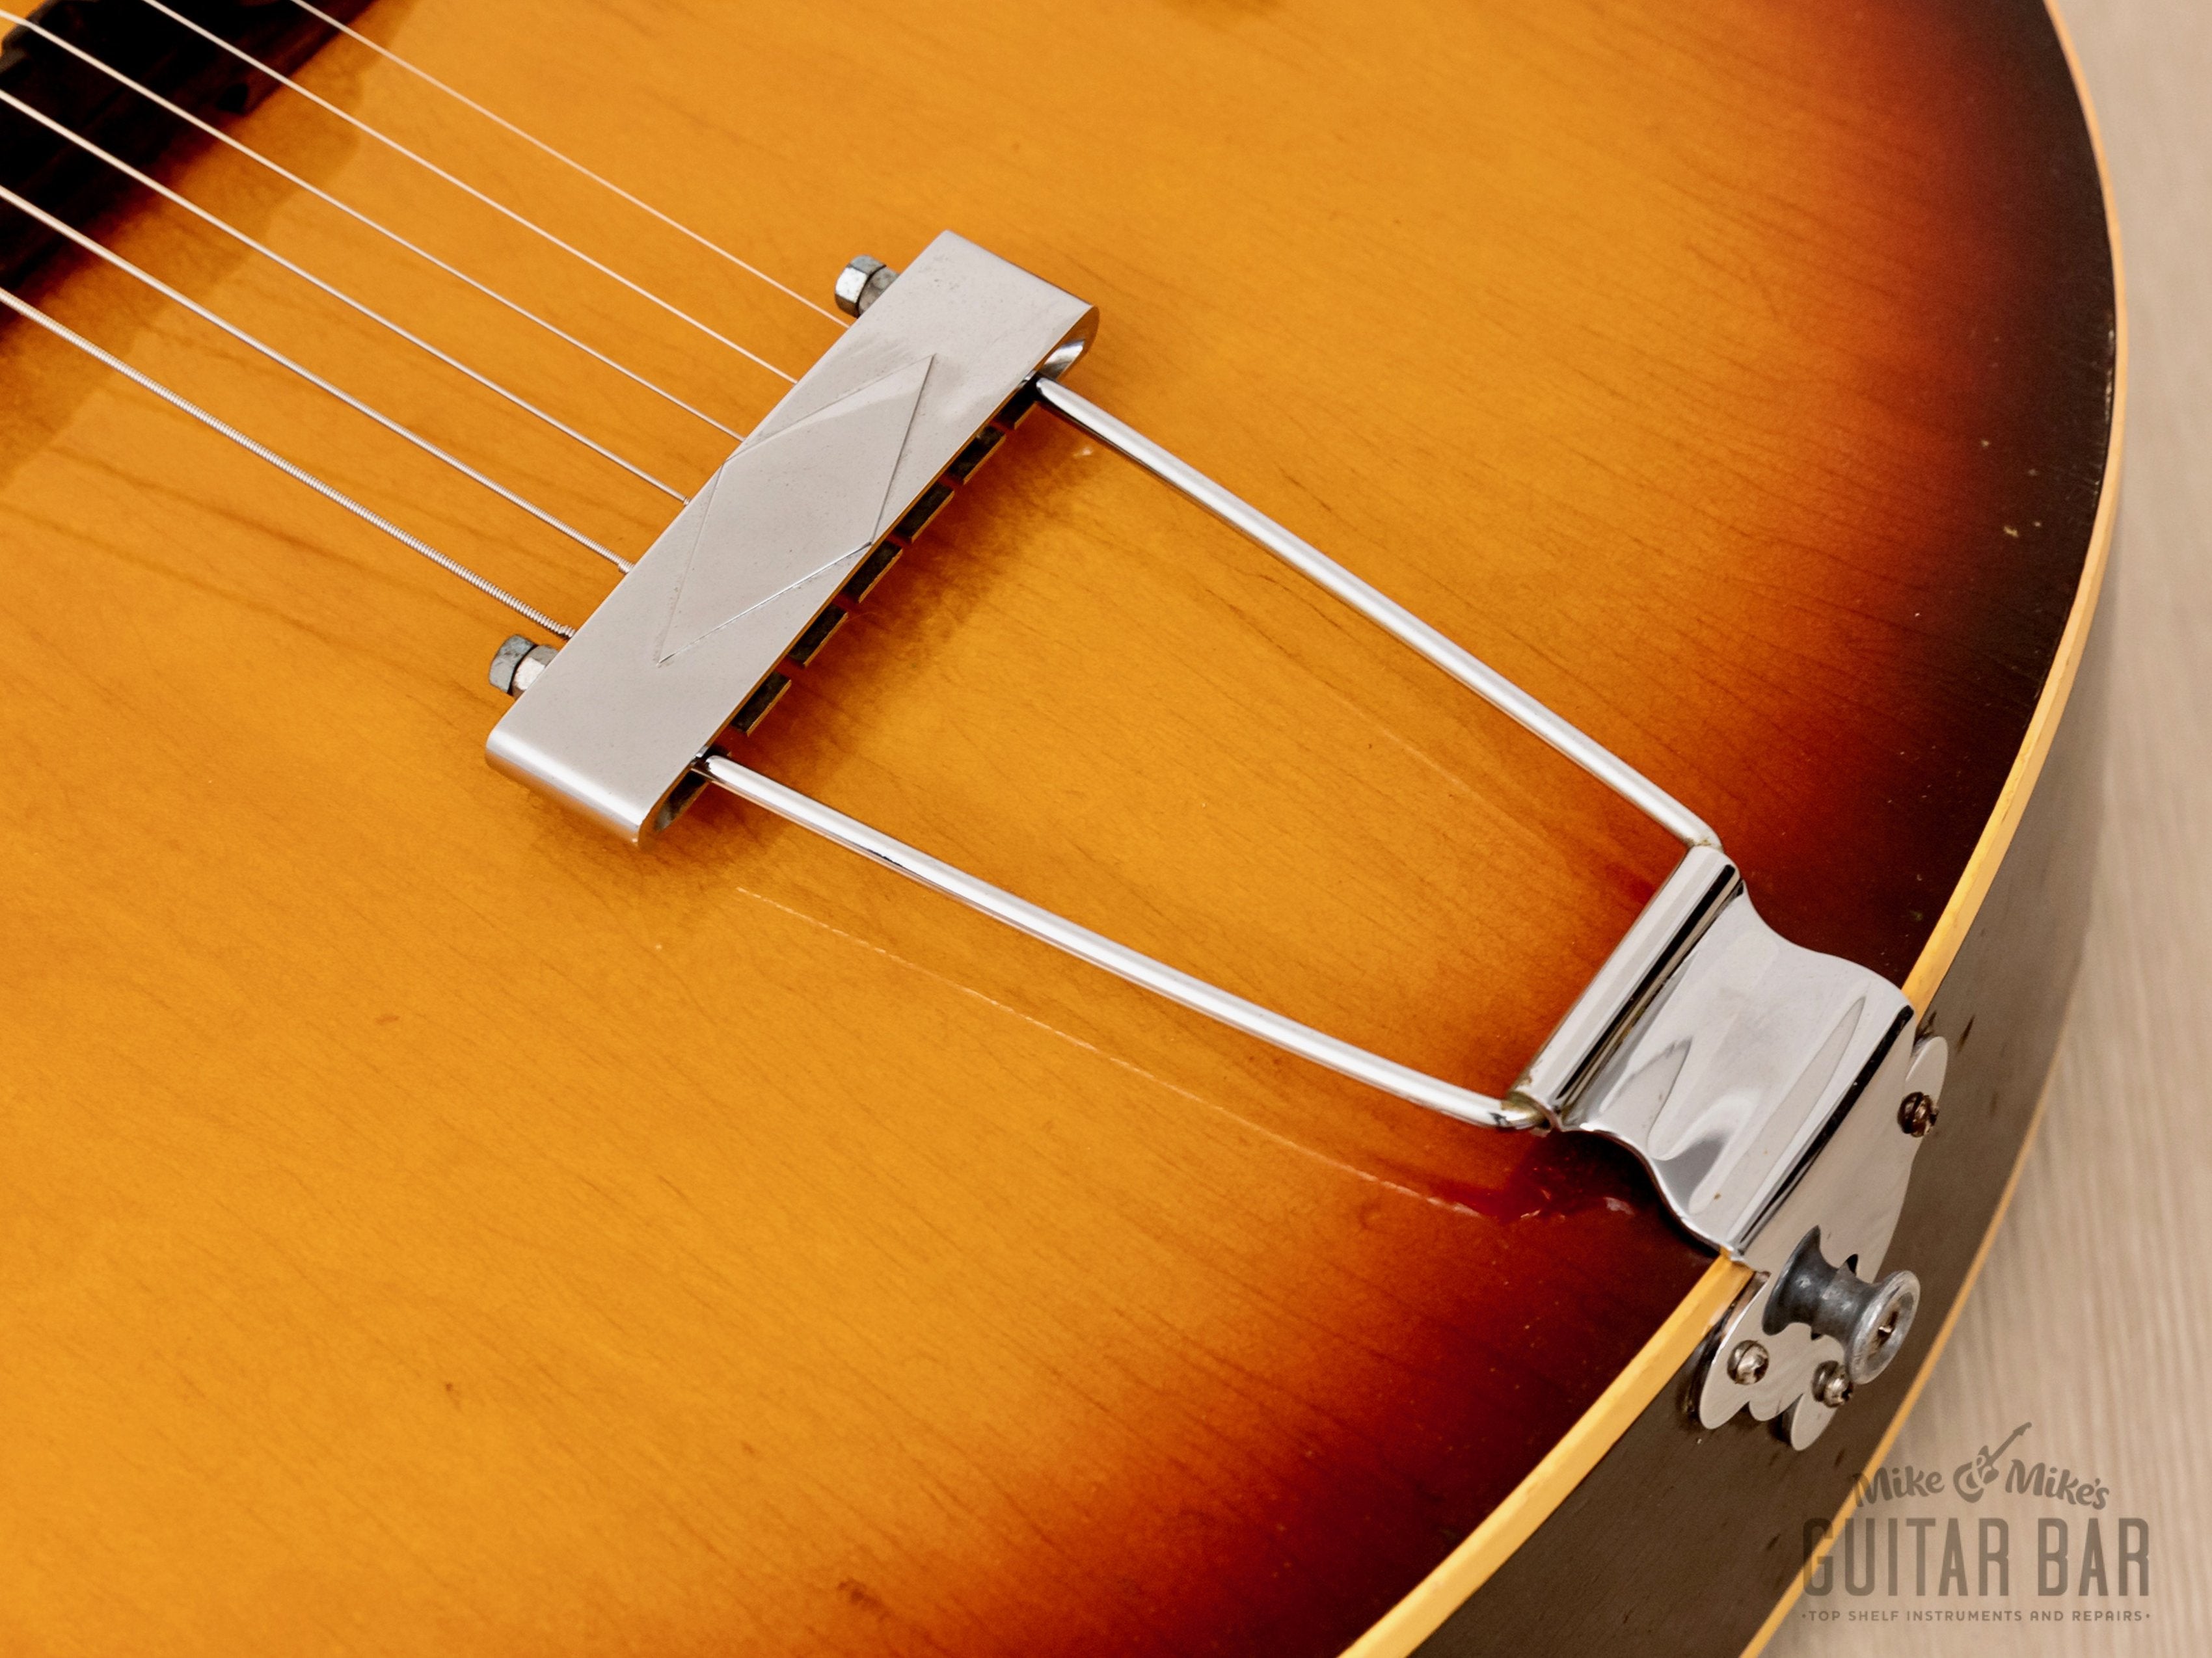 1967 Gibson ES-125 Vintage Hollowbody Electric Guitar 100% Original w/ P-90, Case